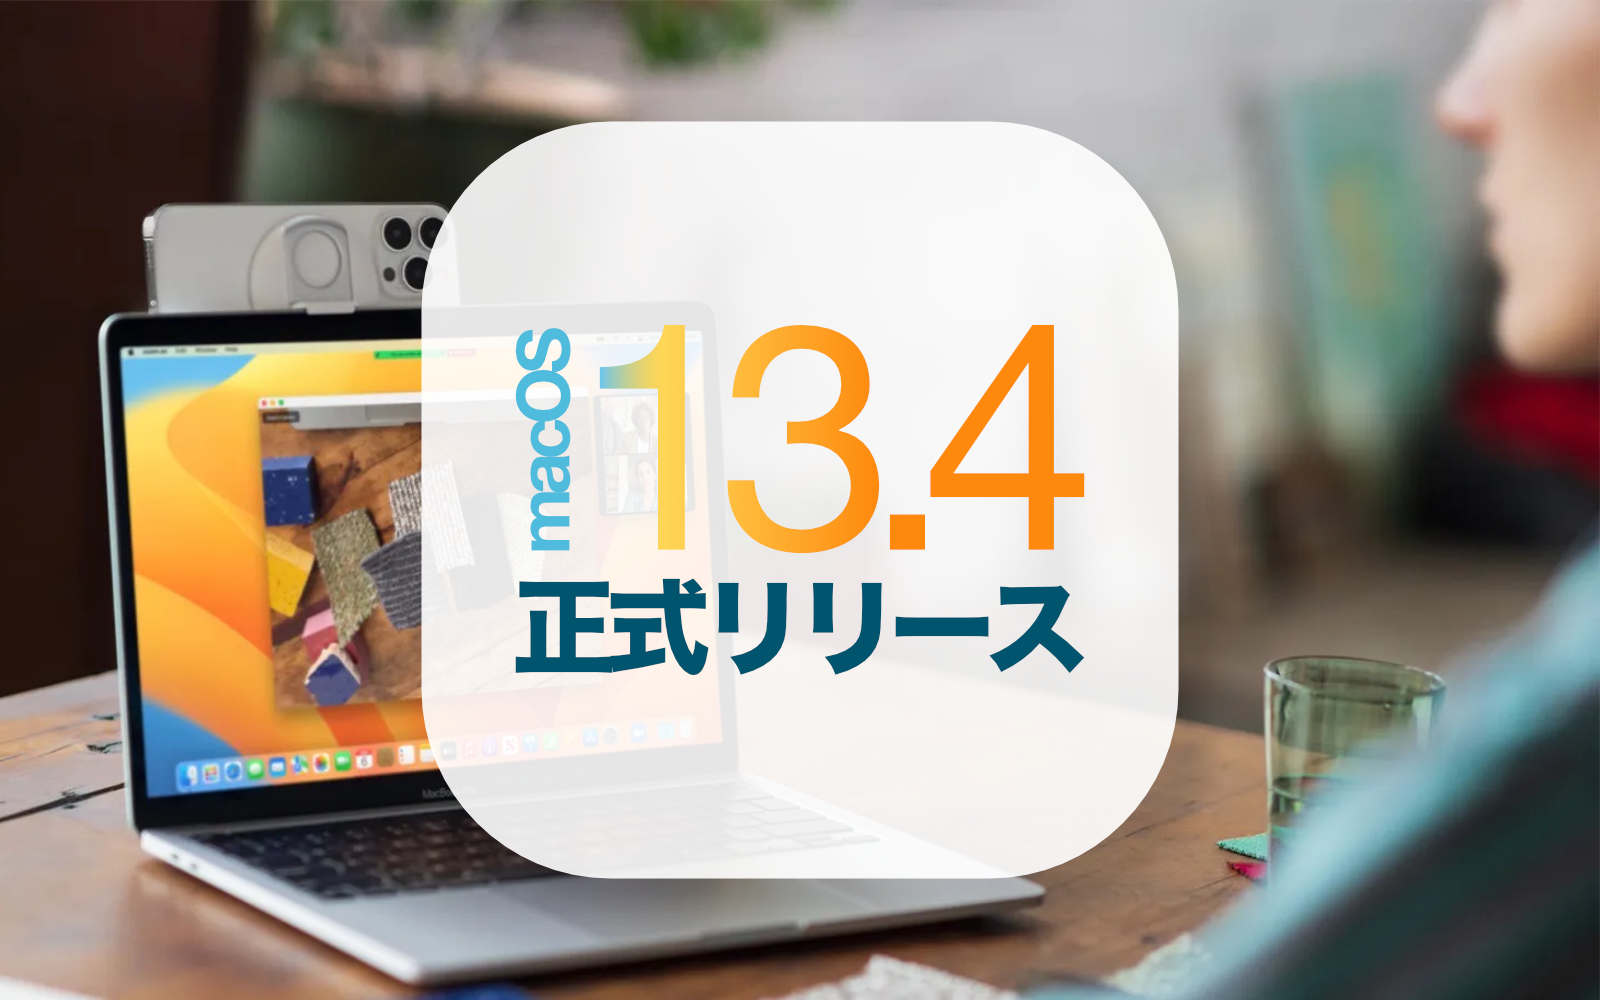 MacOS13 4 Ventura official release